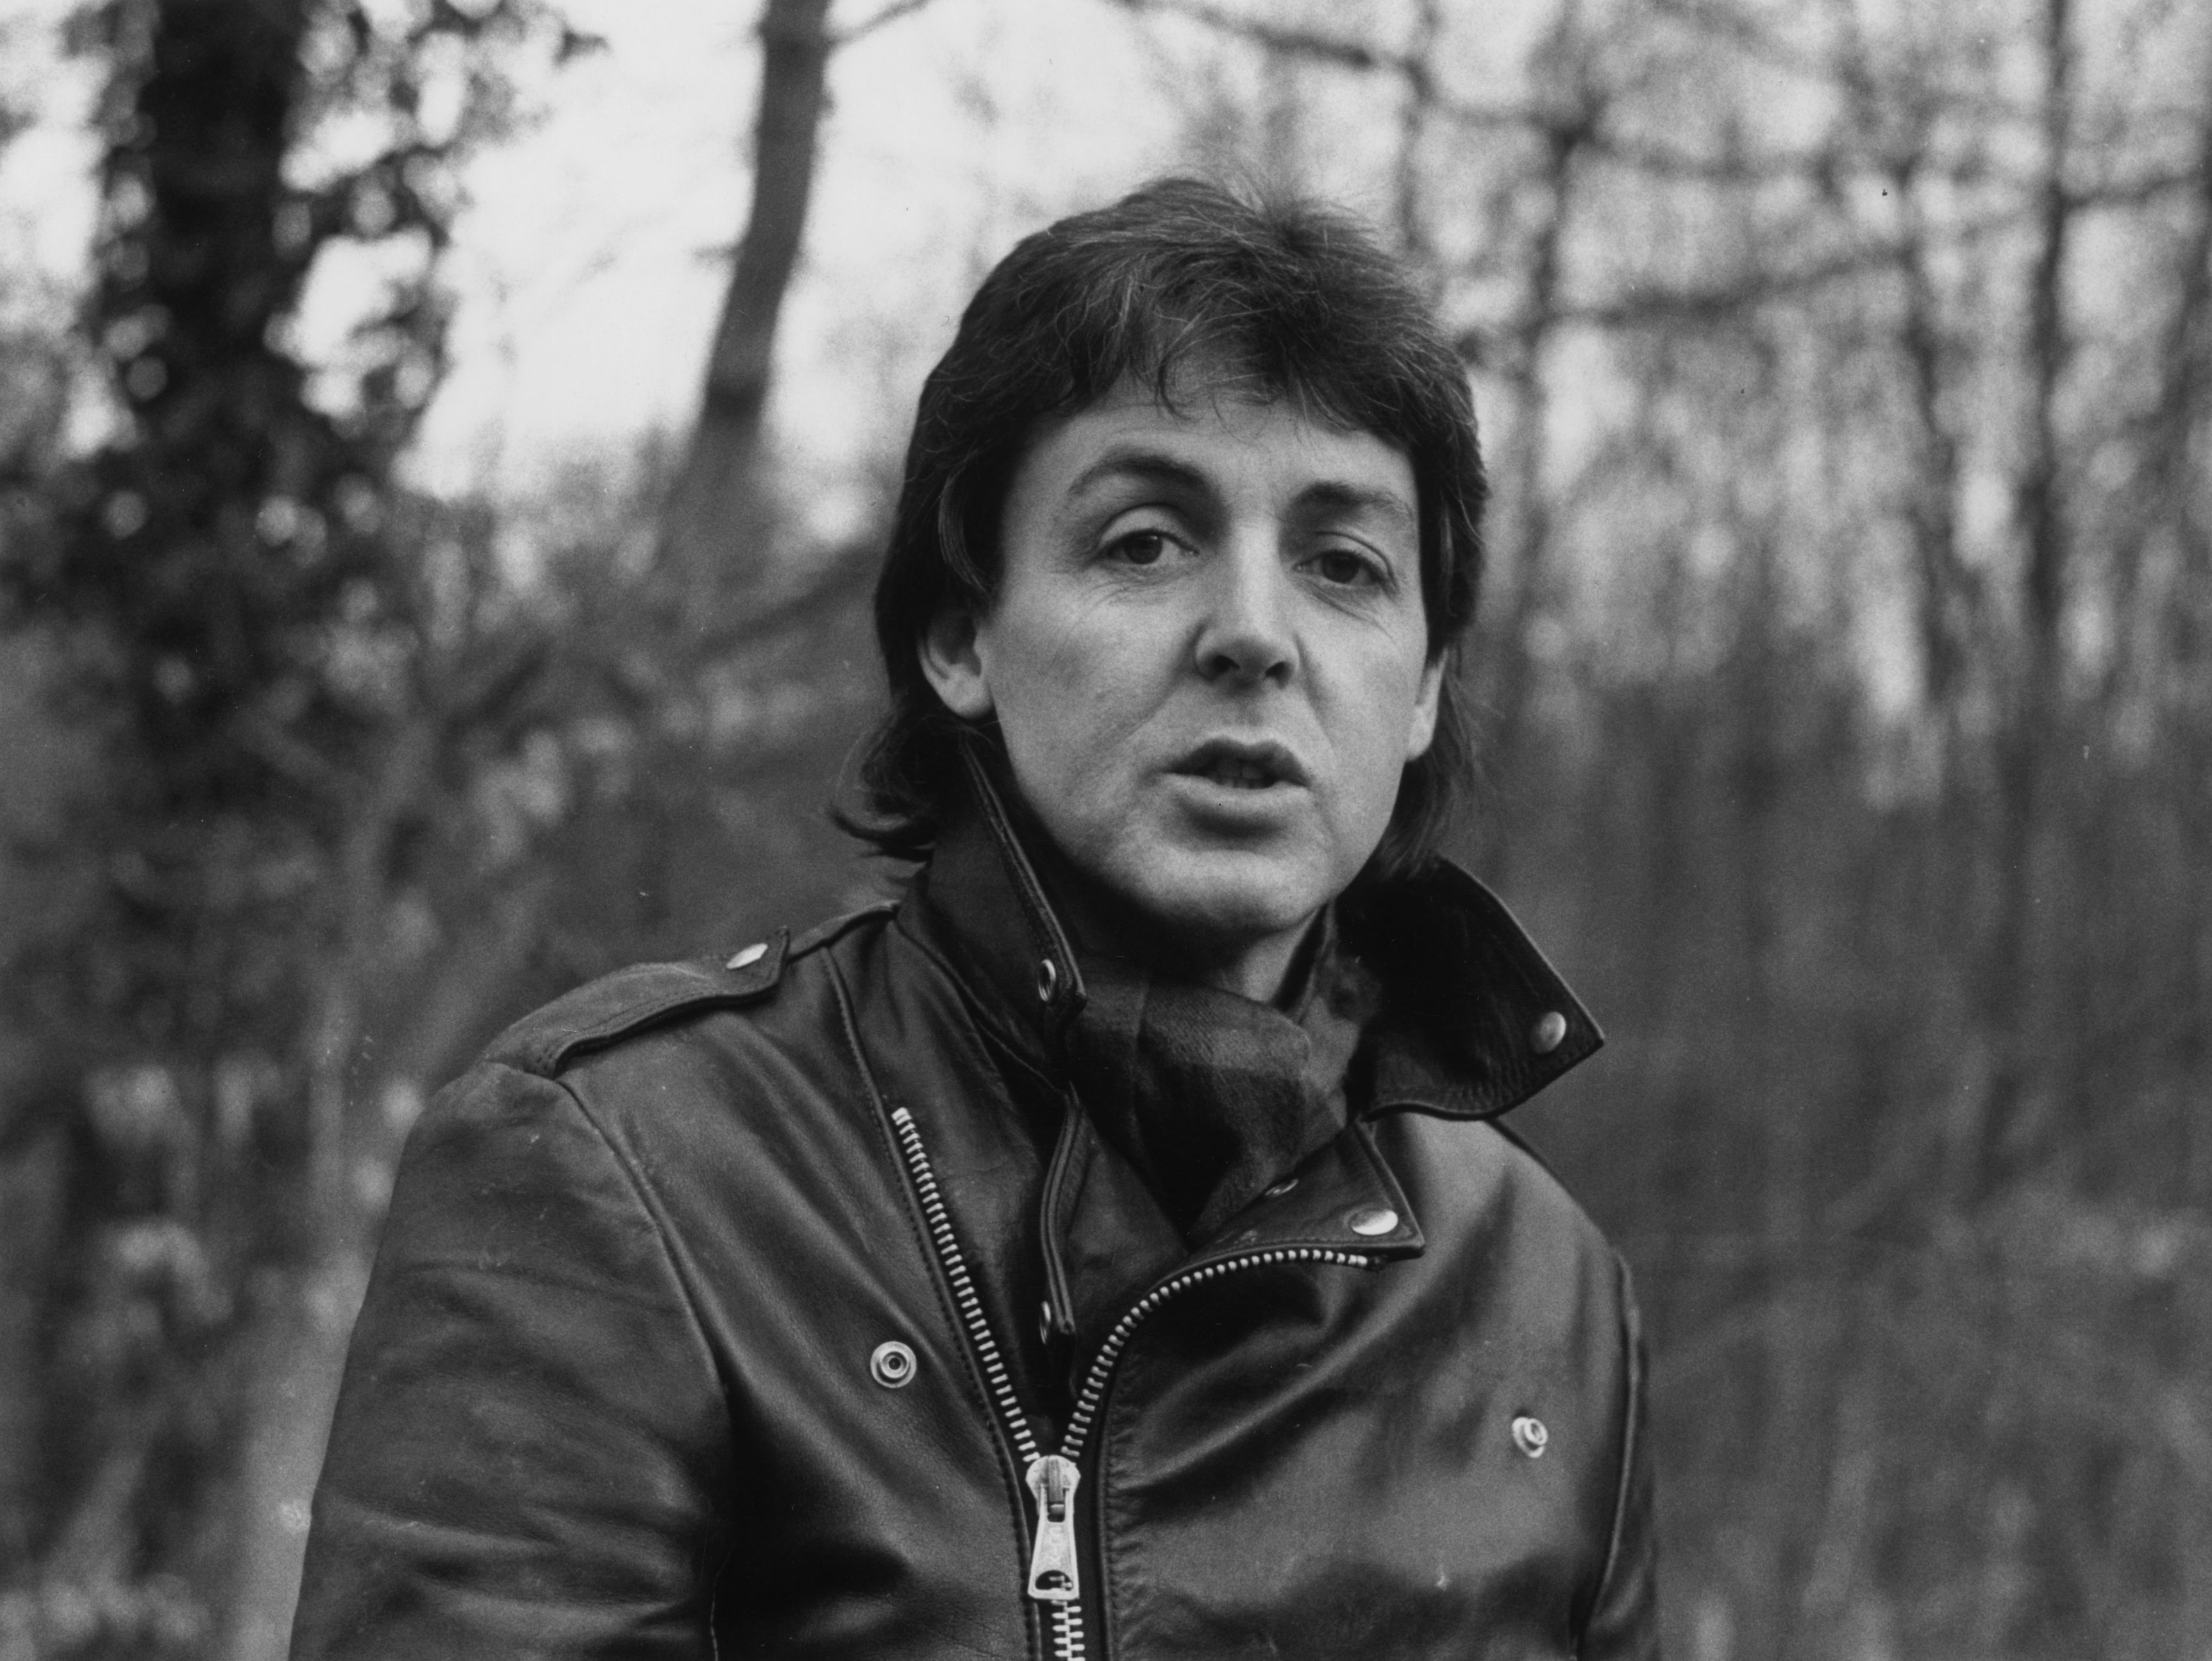 Paul McCartney in a leather jacket